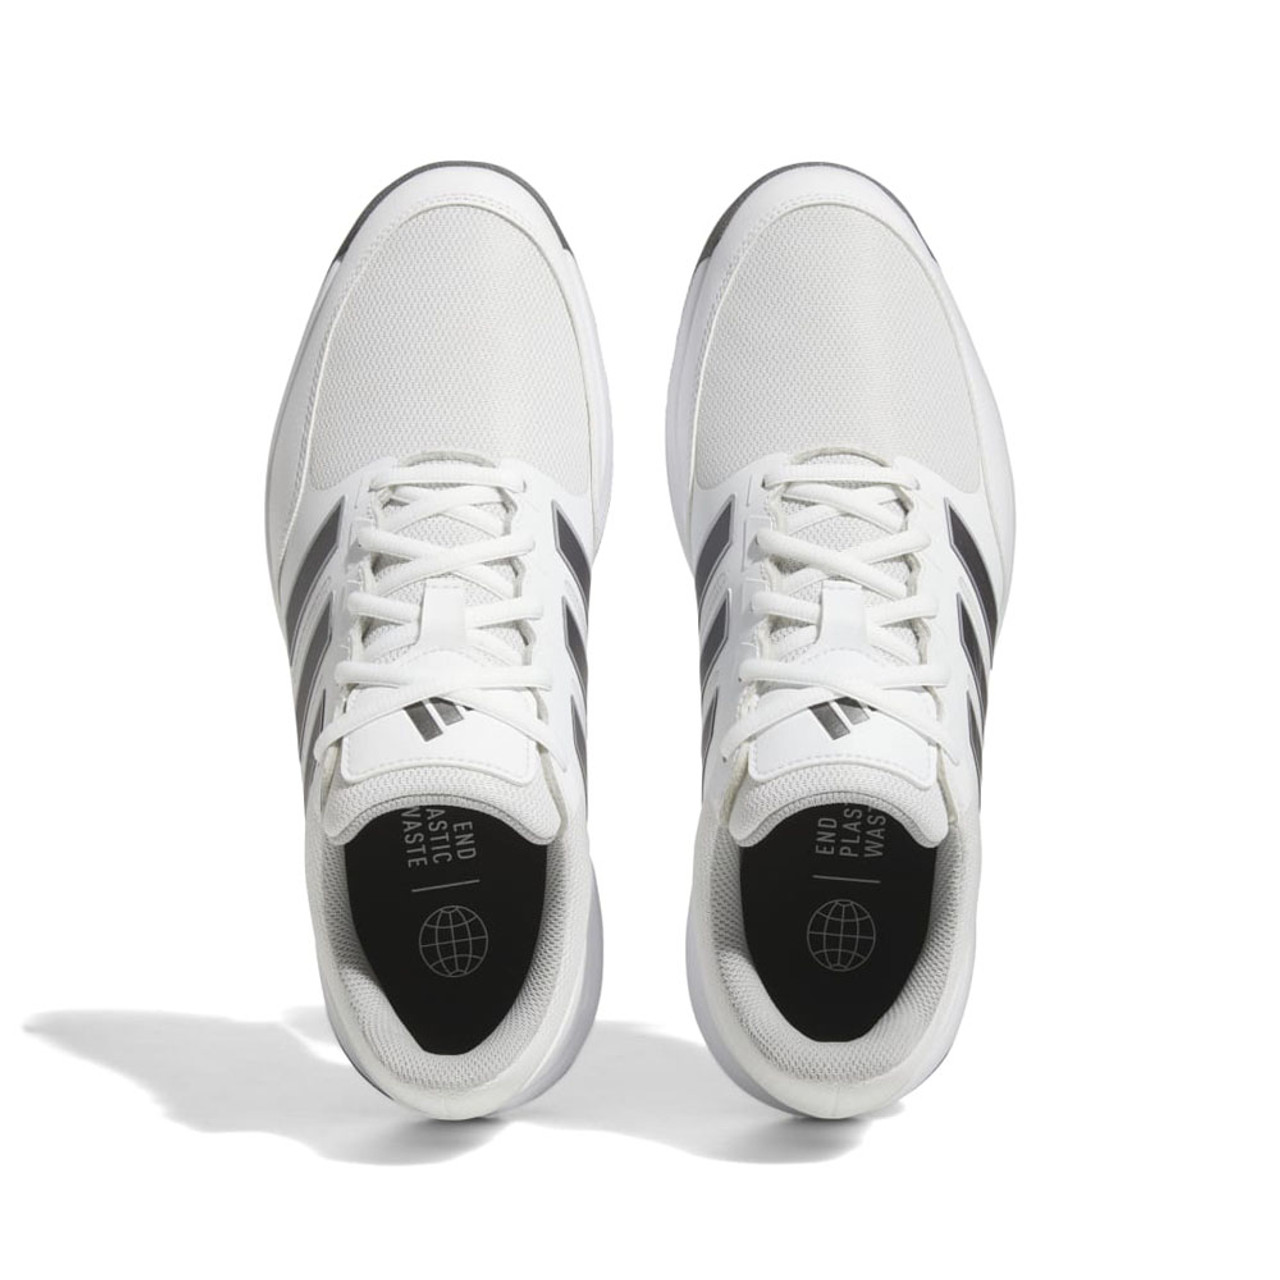 Price: $79.99 Off-White x adidas Yeezy Boost 350 V2 Black/White  Men's/Women's Black/White Shoes